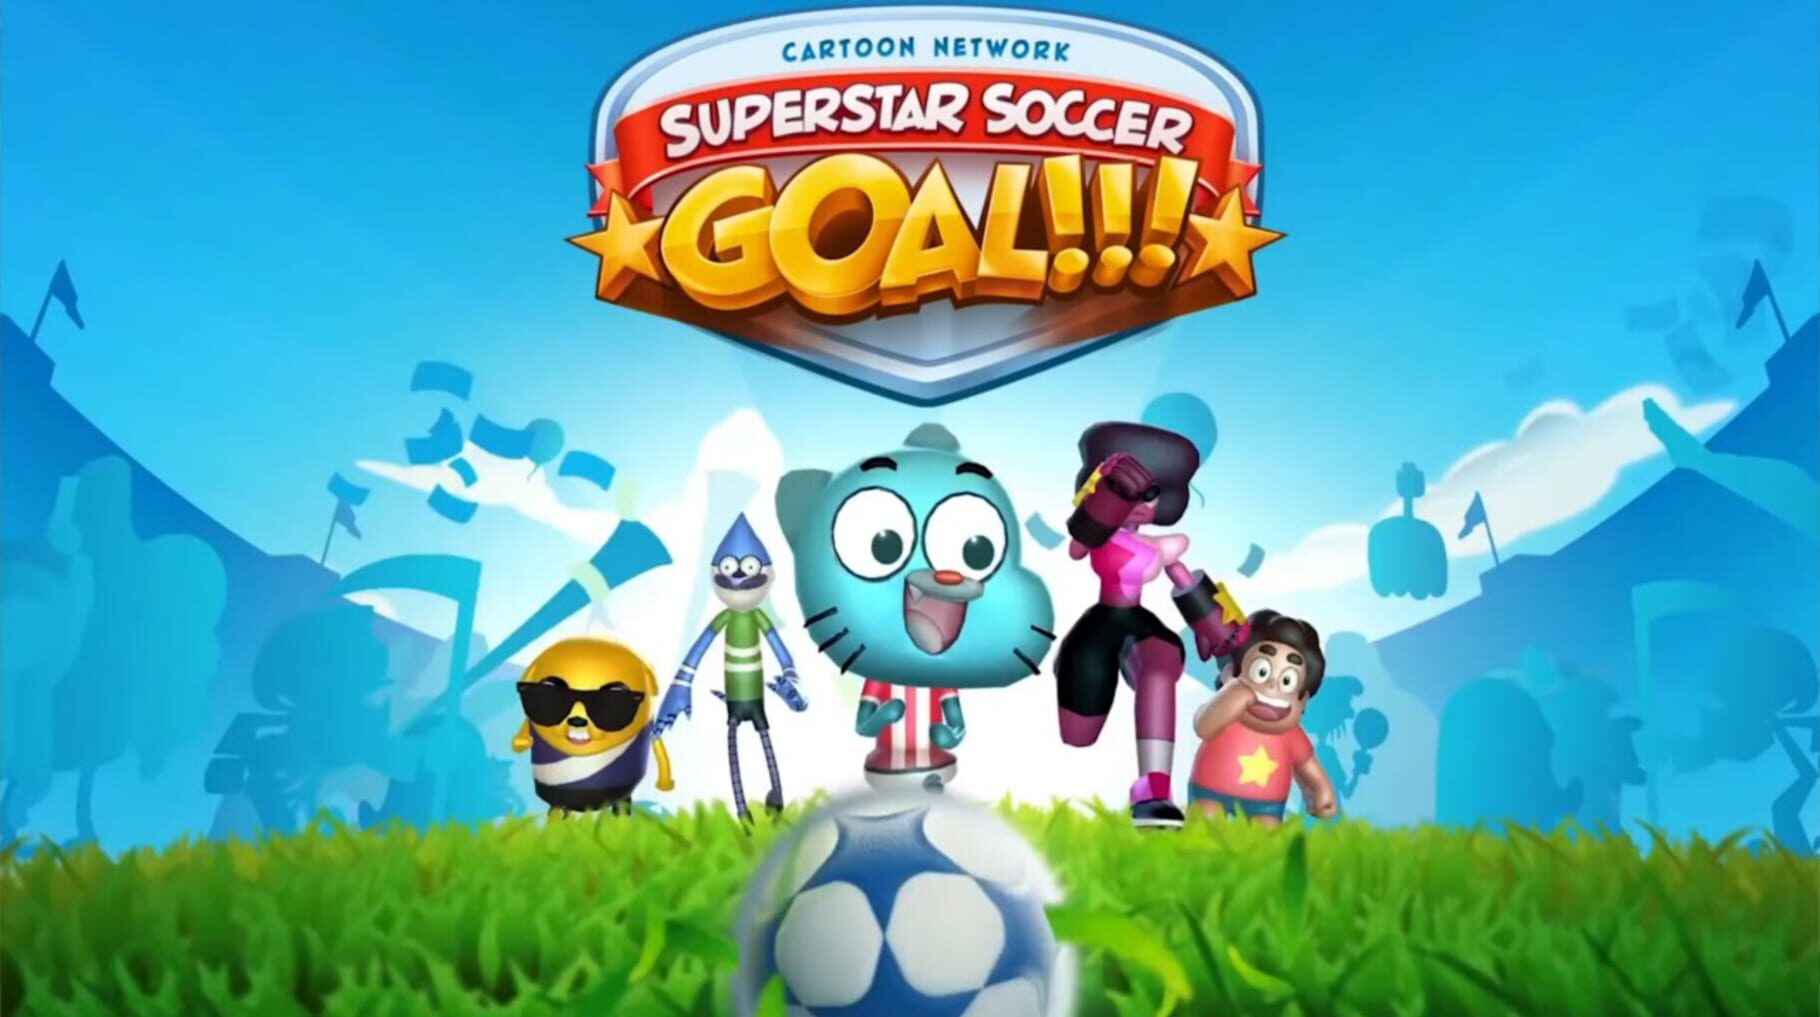 Cartoon Network Superstar Soccer: Goal!!! Image